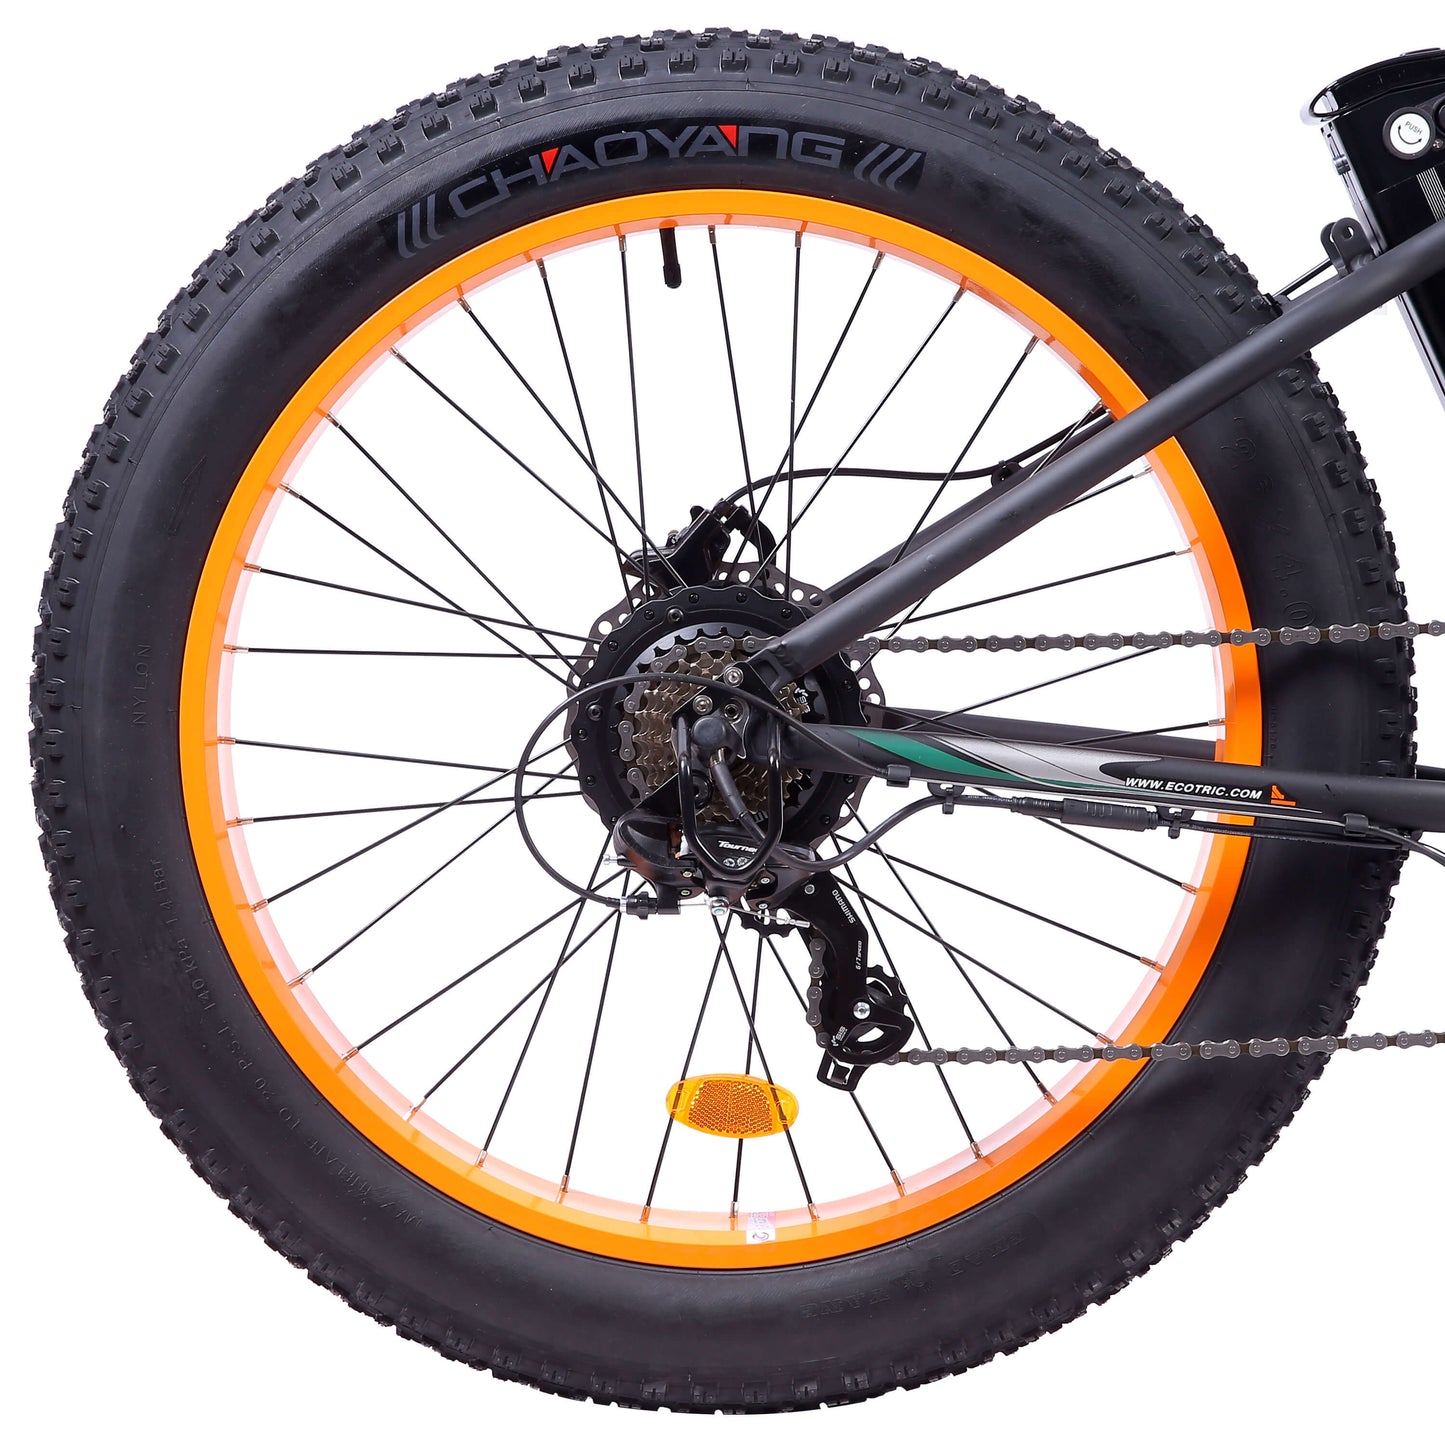 Ecotric Hammer Electric Fat Tire Beach Snow Bike - Orange